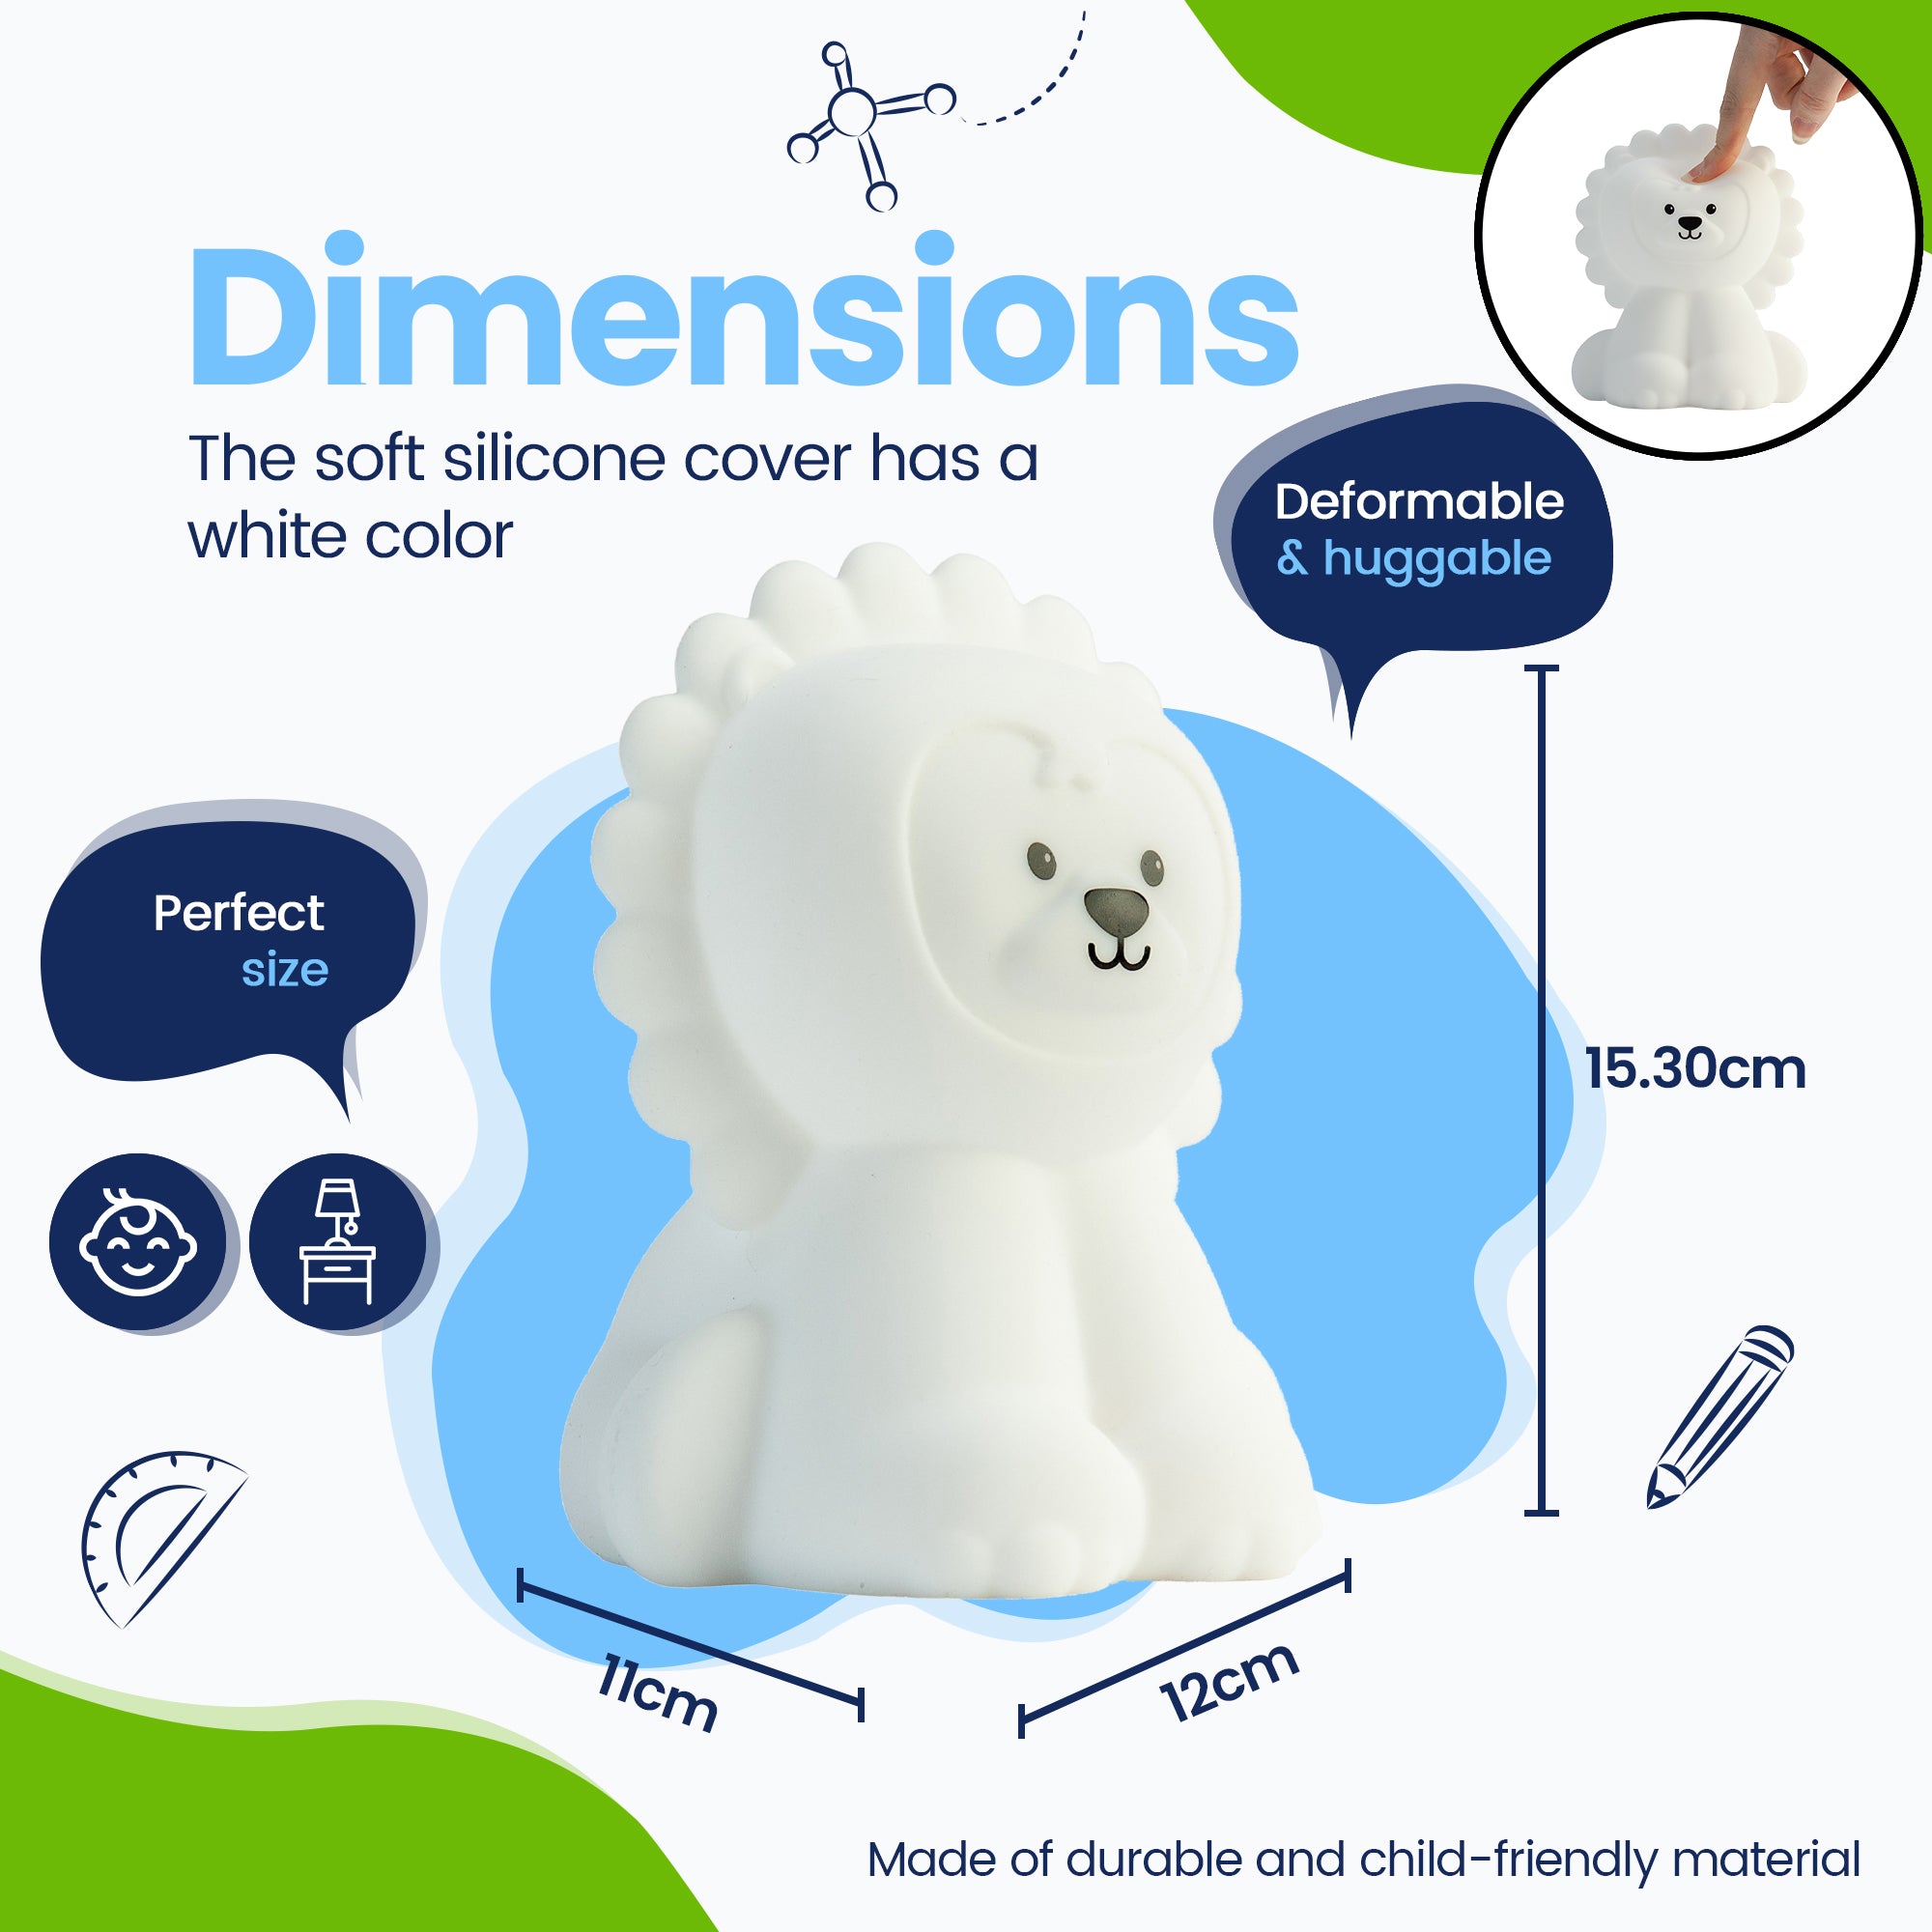 Dimensions Lion Night Lamp - Perfect size - Premium Design - The silicone cover is white in color